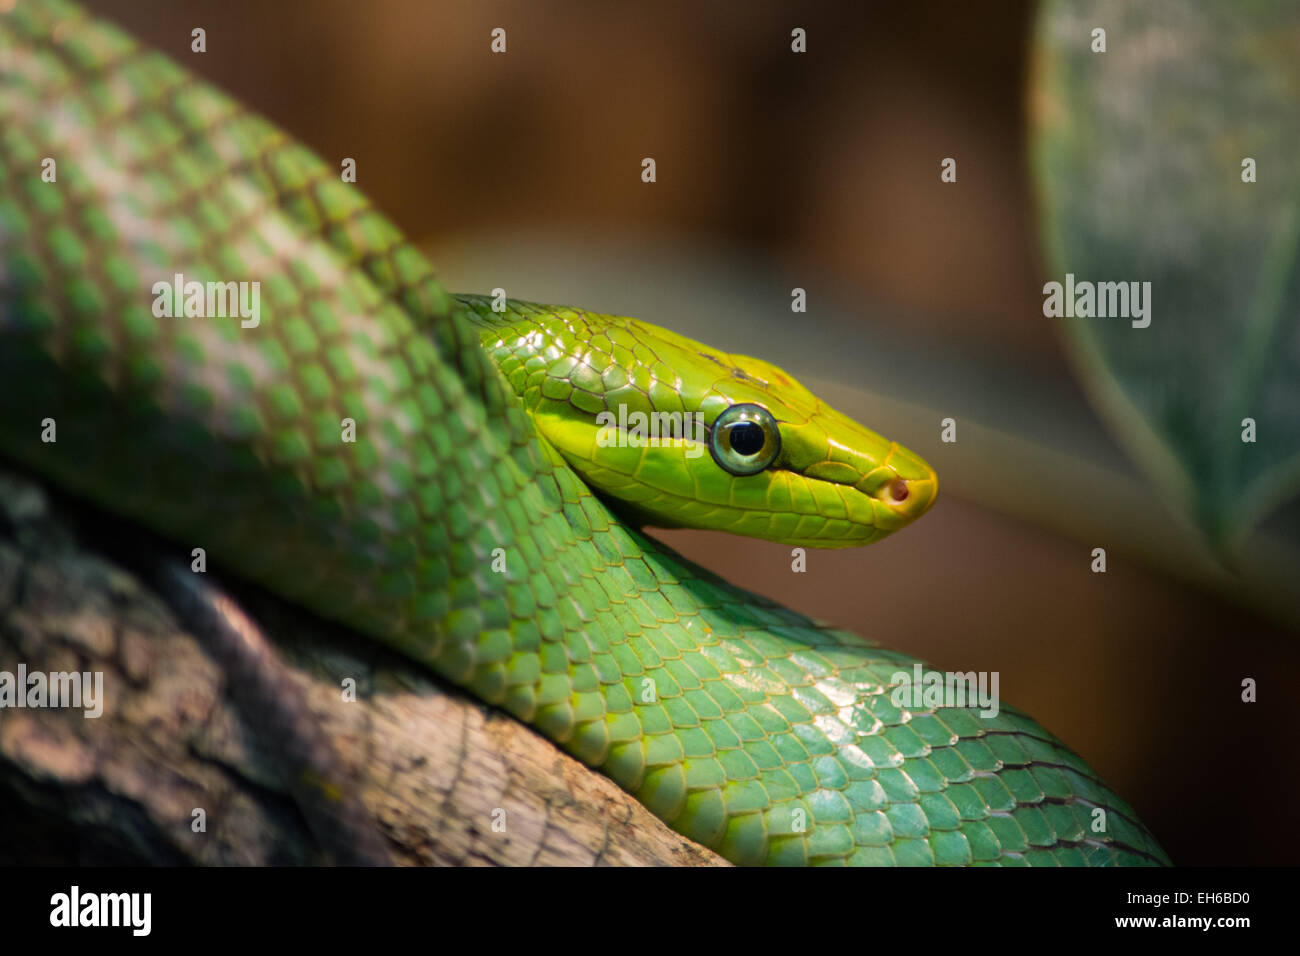 Green tree snake sentado en root Foto de stock